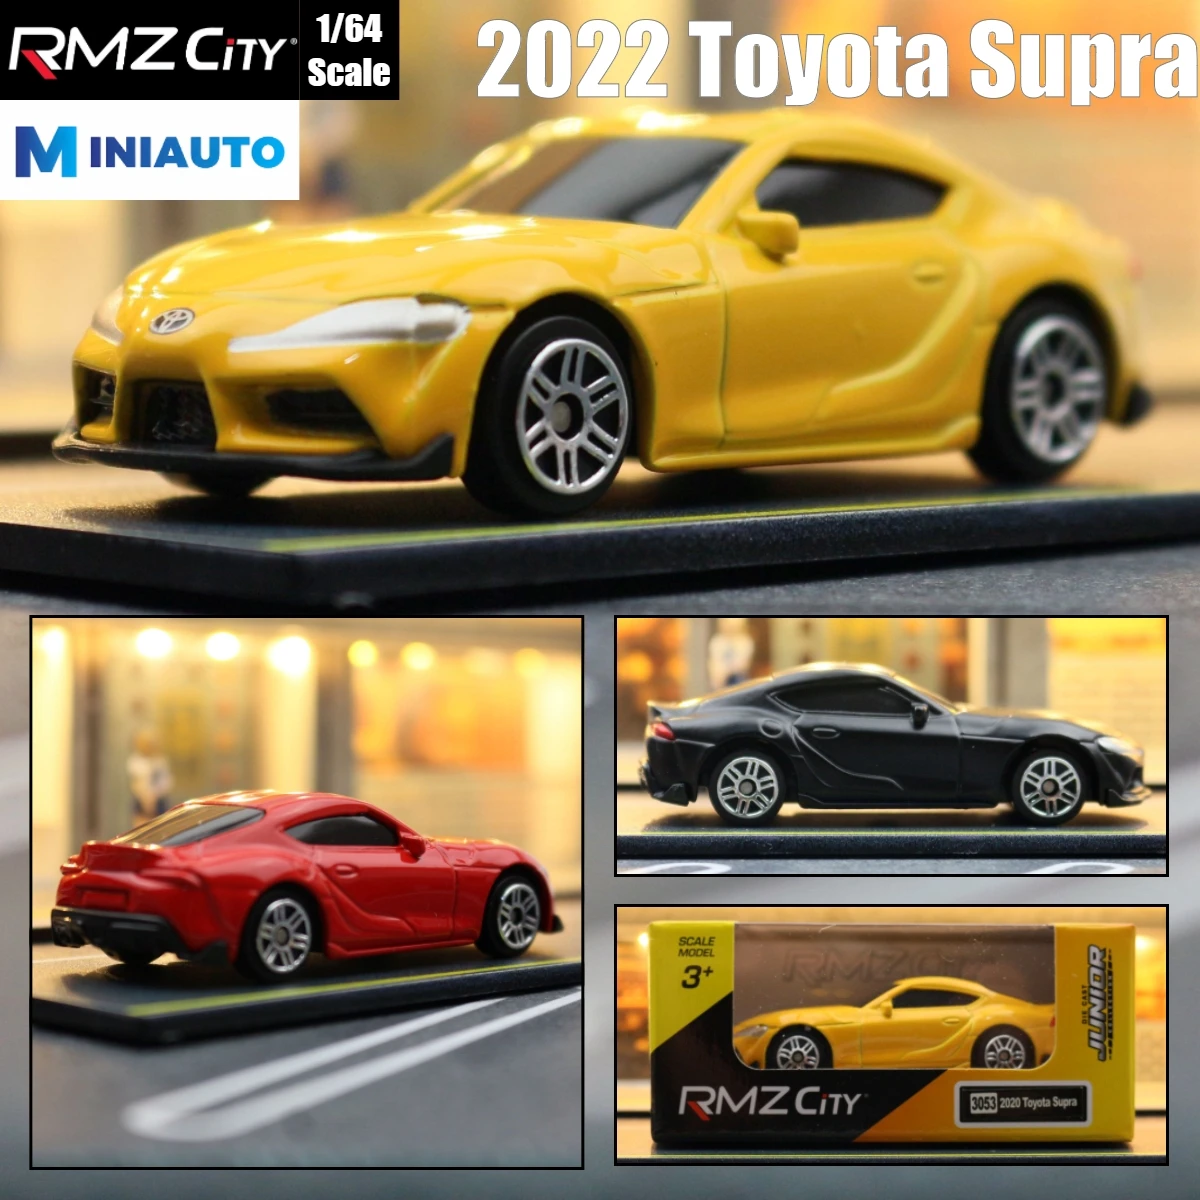 1/64 TOYOTA Supra, 1:64 Diecast Super Sport Toy Car Model 3” Hot Wheels Miniature, Zinc Alloy Metal Gift For Boys Children Kid